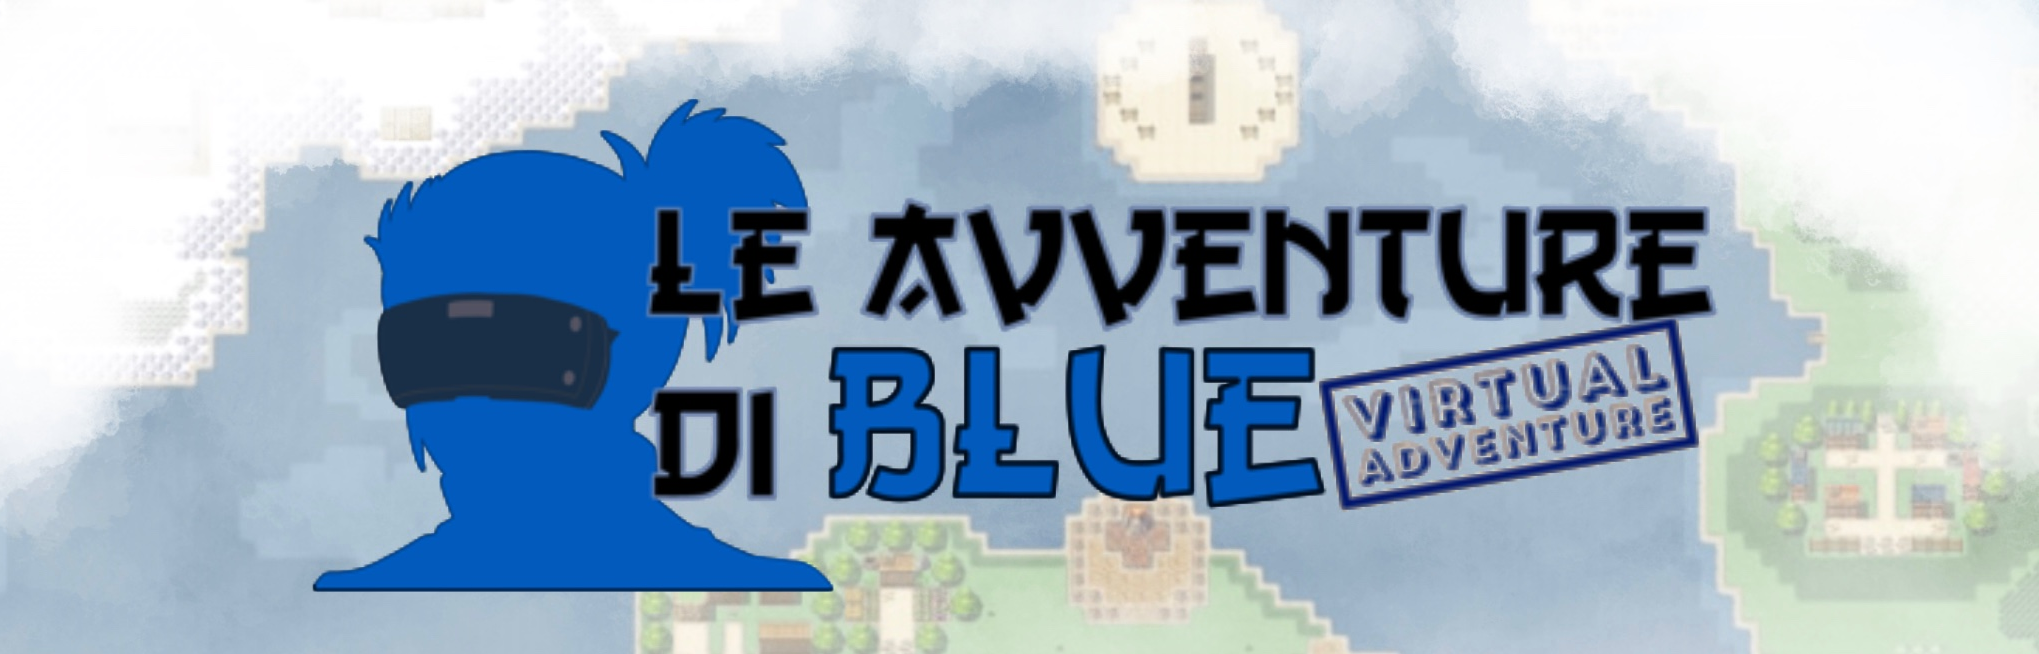 Le Avventure di Blue